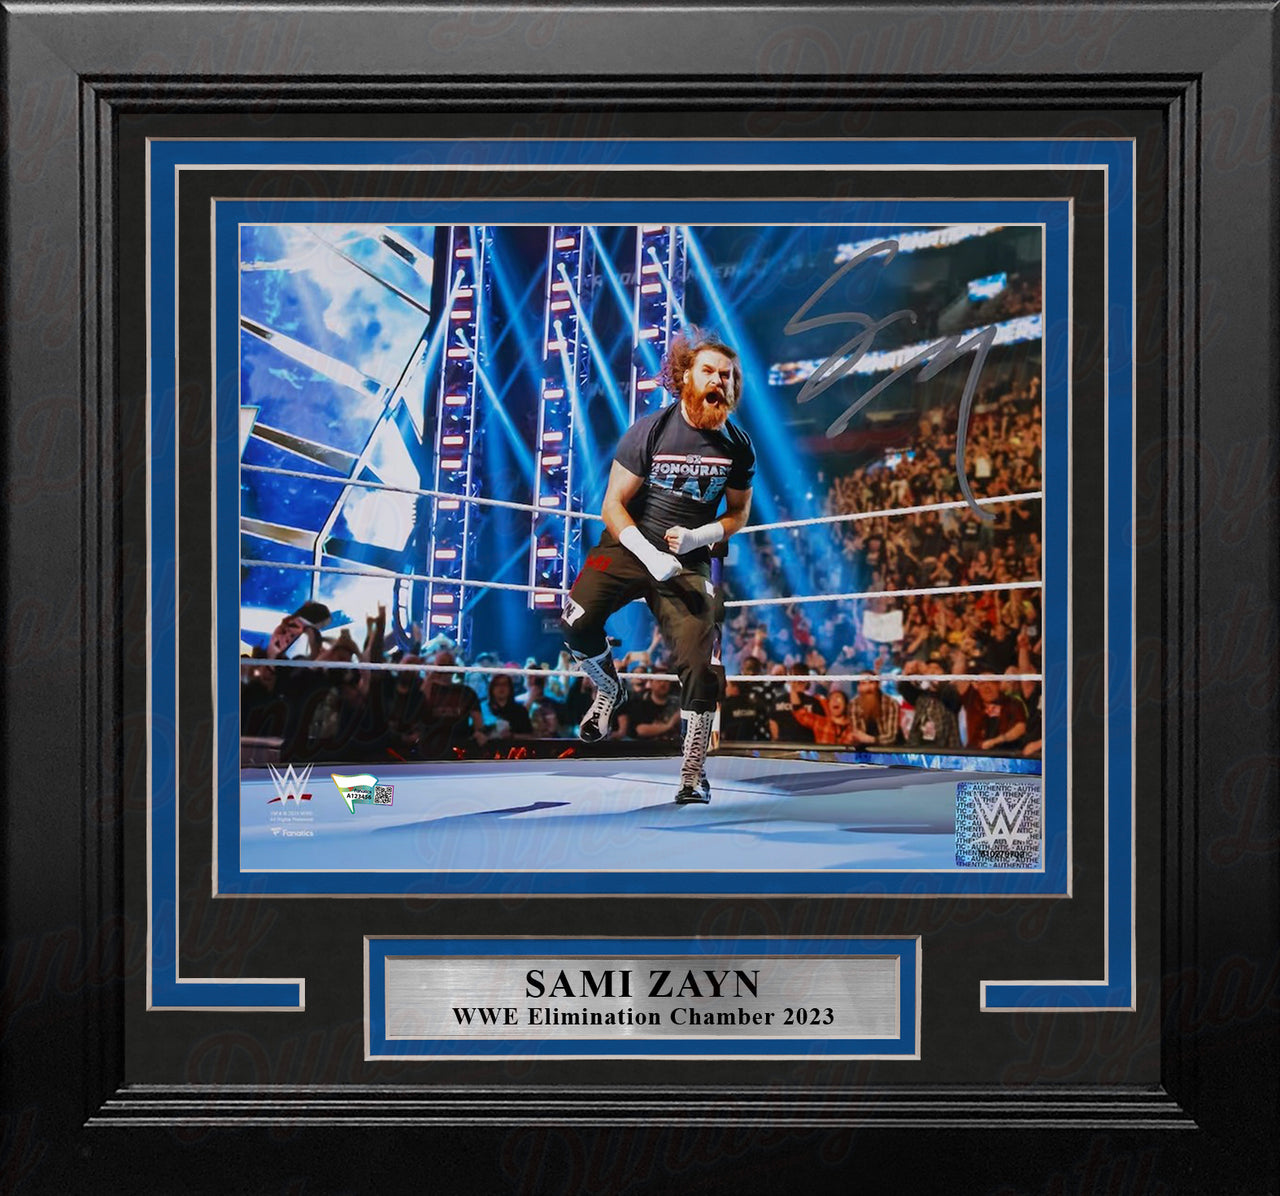 Sami Zayn Elimination Chamber 2023 Autographed WWE Wrestling 8" x 10" Framed Photo - Dynasty Sports & Framing 